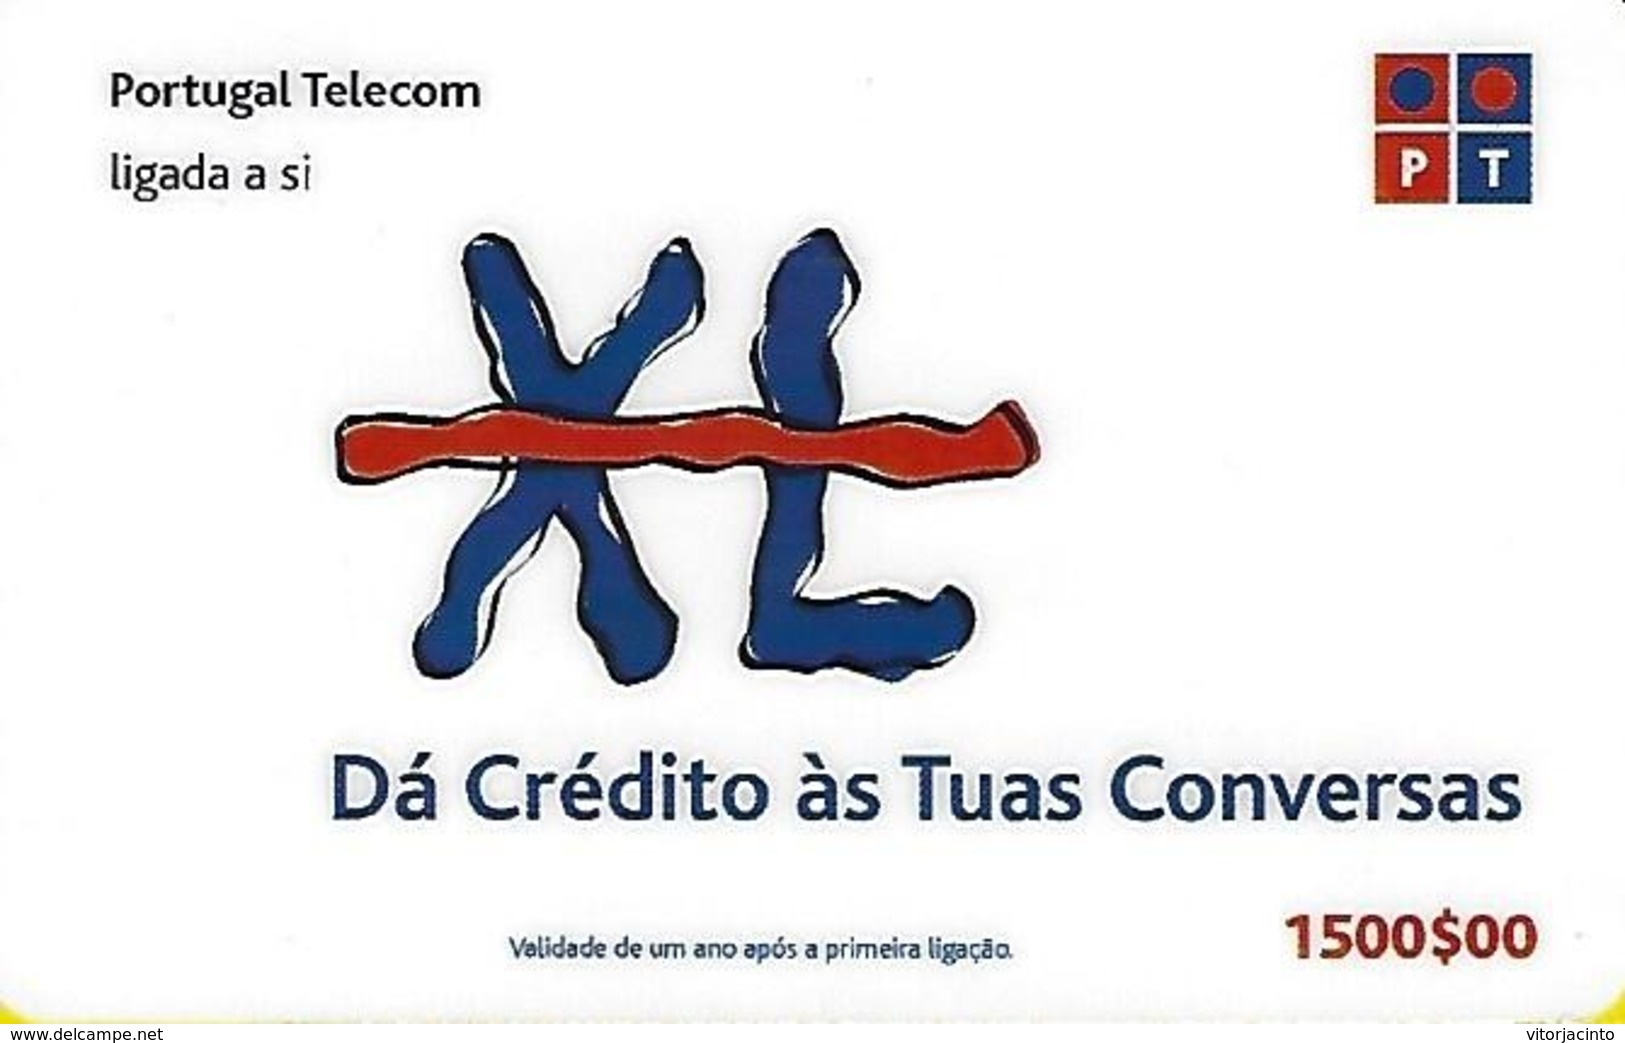 XL PT (Dá Crédito às Tuas Conversas) 1500 Prepaid Phonecard - Portugal - Portugal